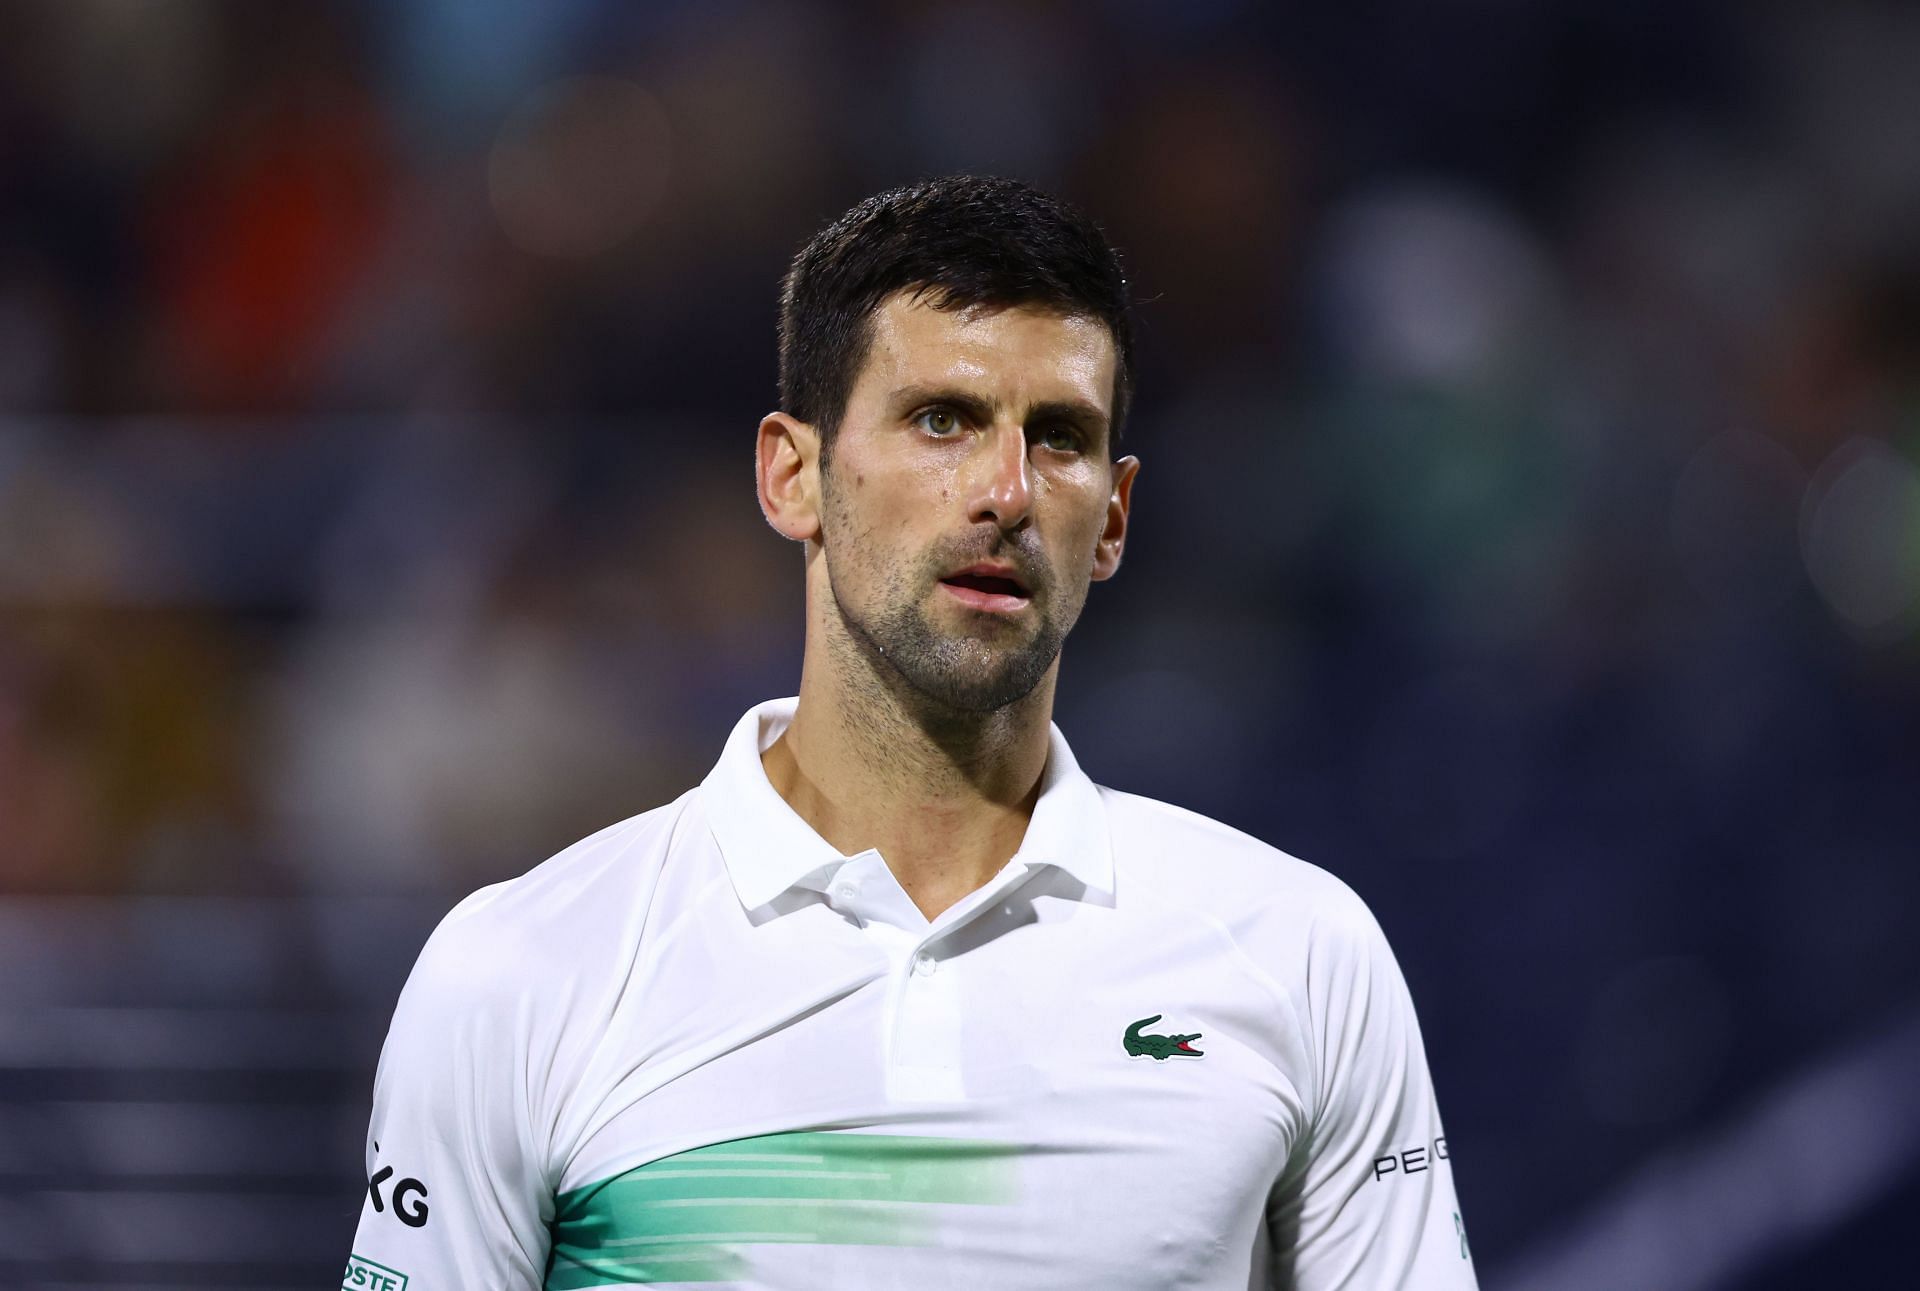 Novak Djokovic at the 2022 Dubai Duty Free Tennis Championships